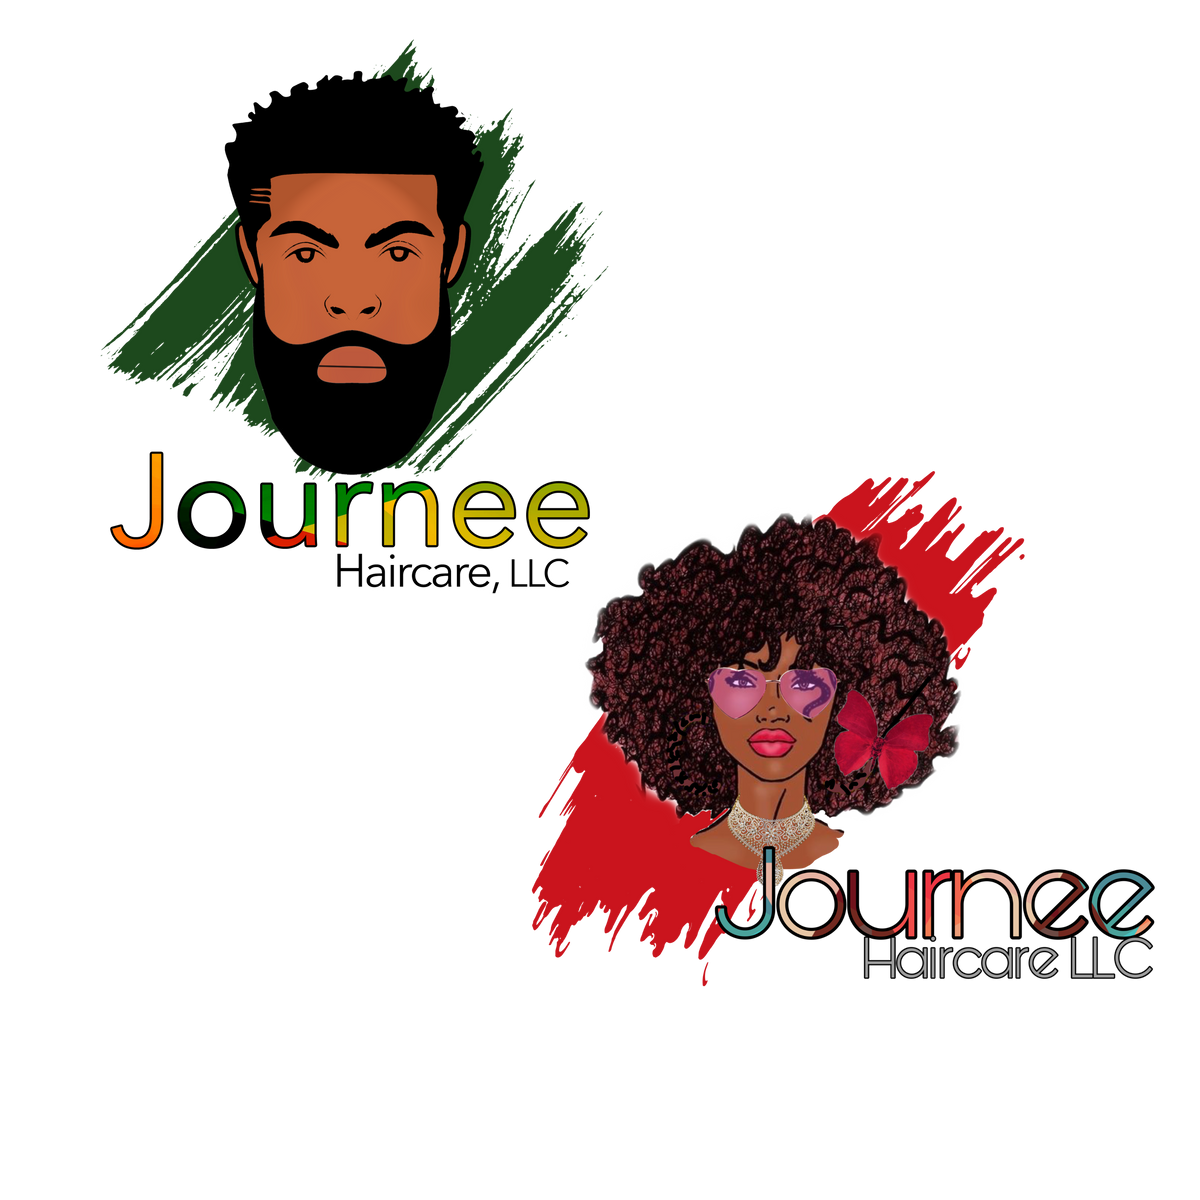 Journee Haircare LLC